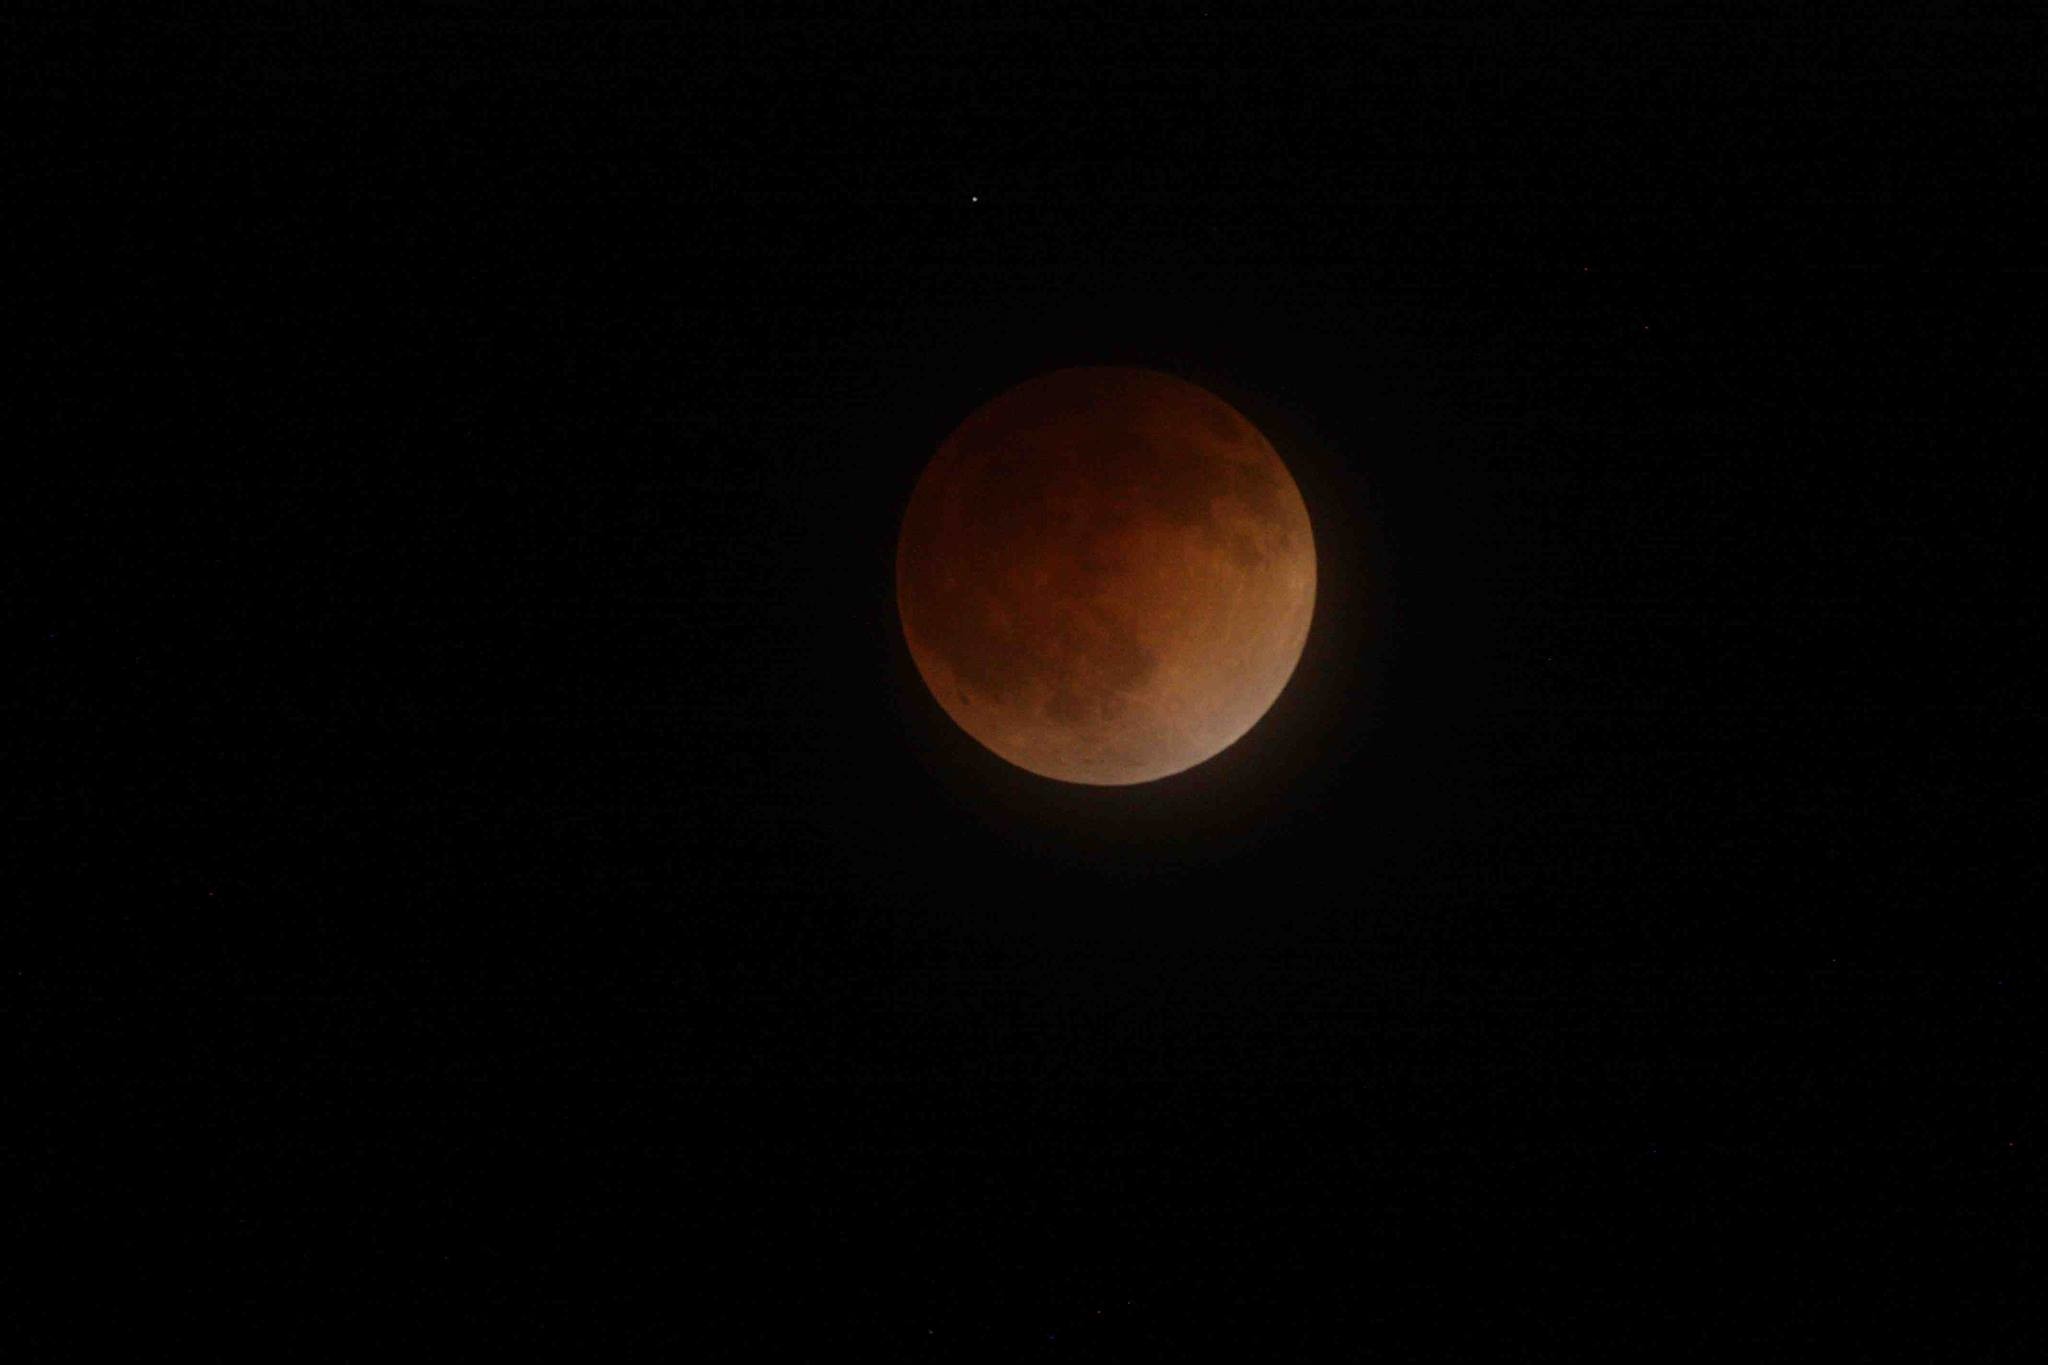 2048x1365 image of lunar eclipse